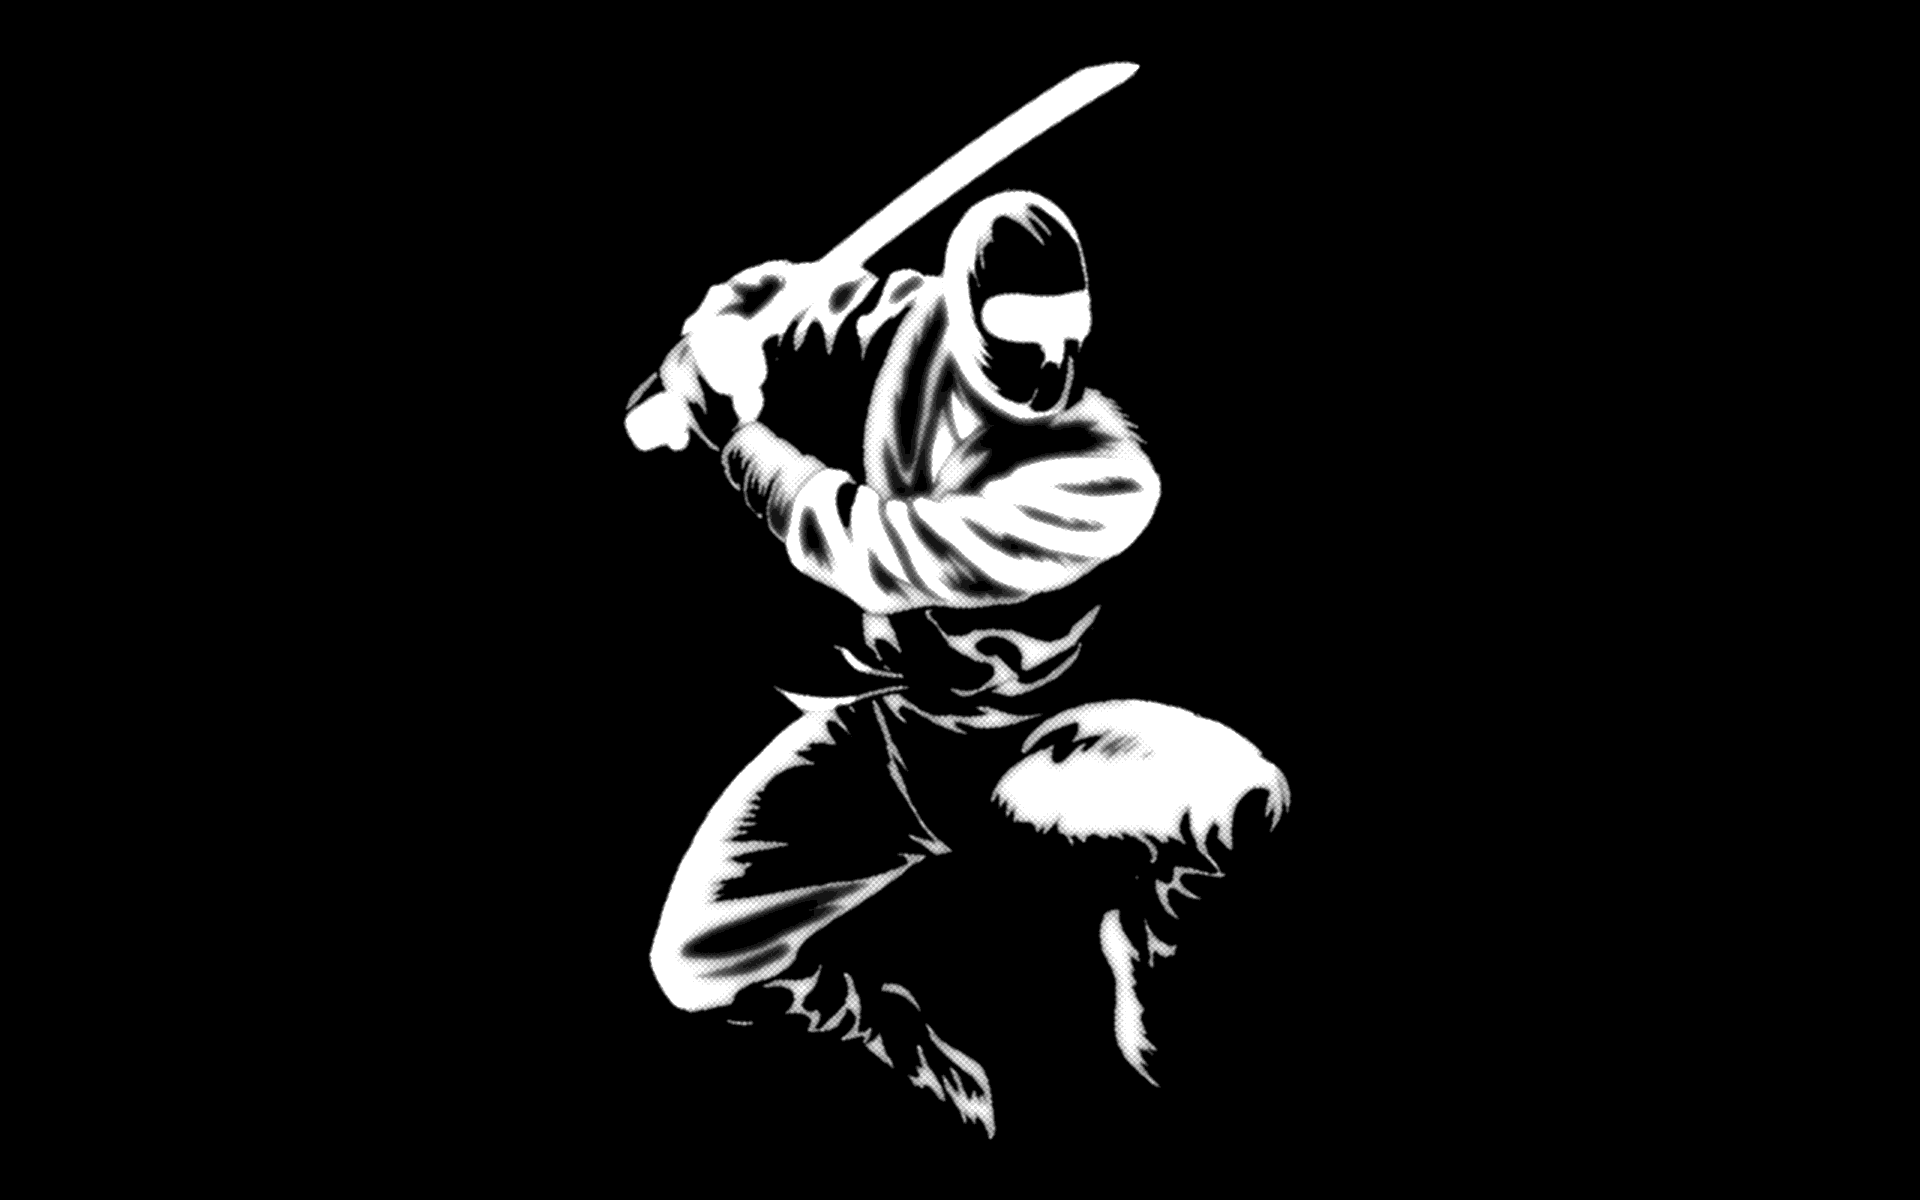 Black and White Ninja Logo - Free Ninja Wallpapers Download | PixelsTalk.Net